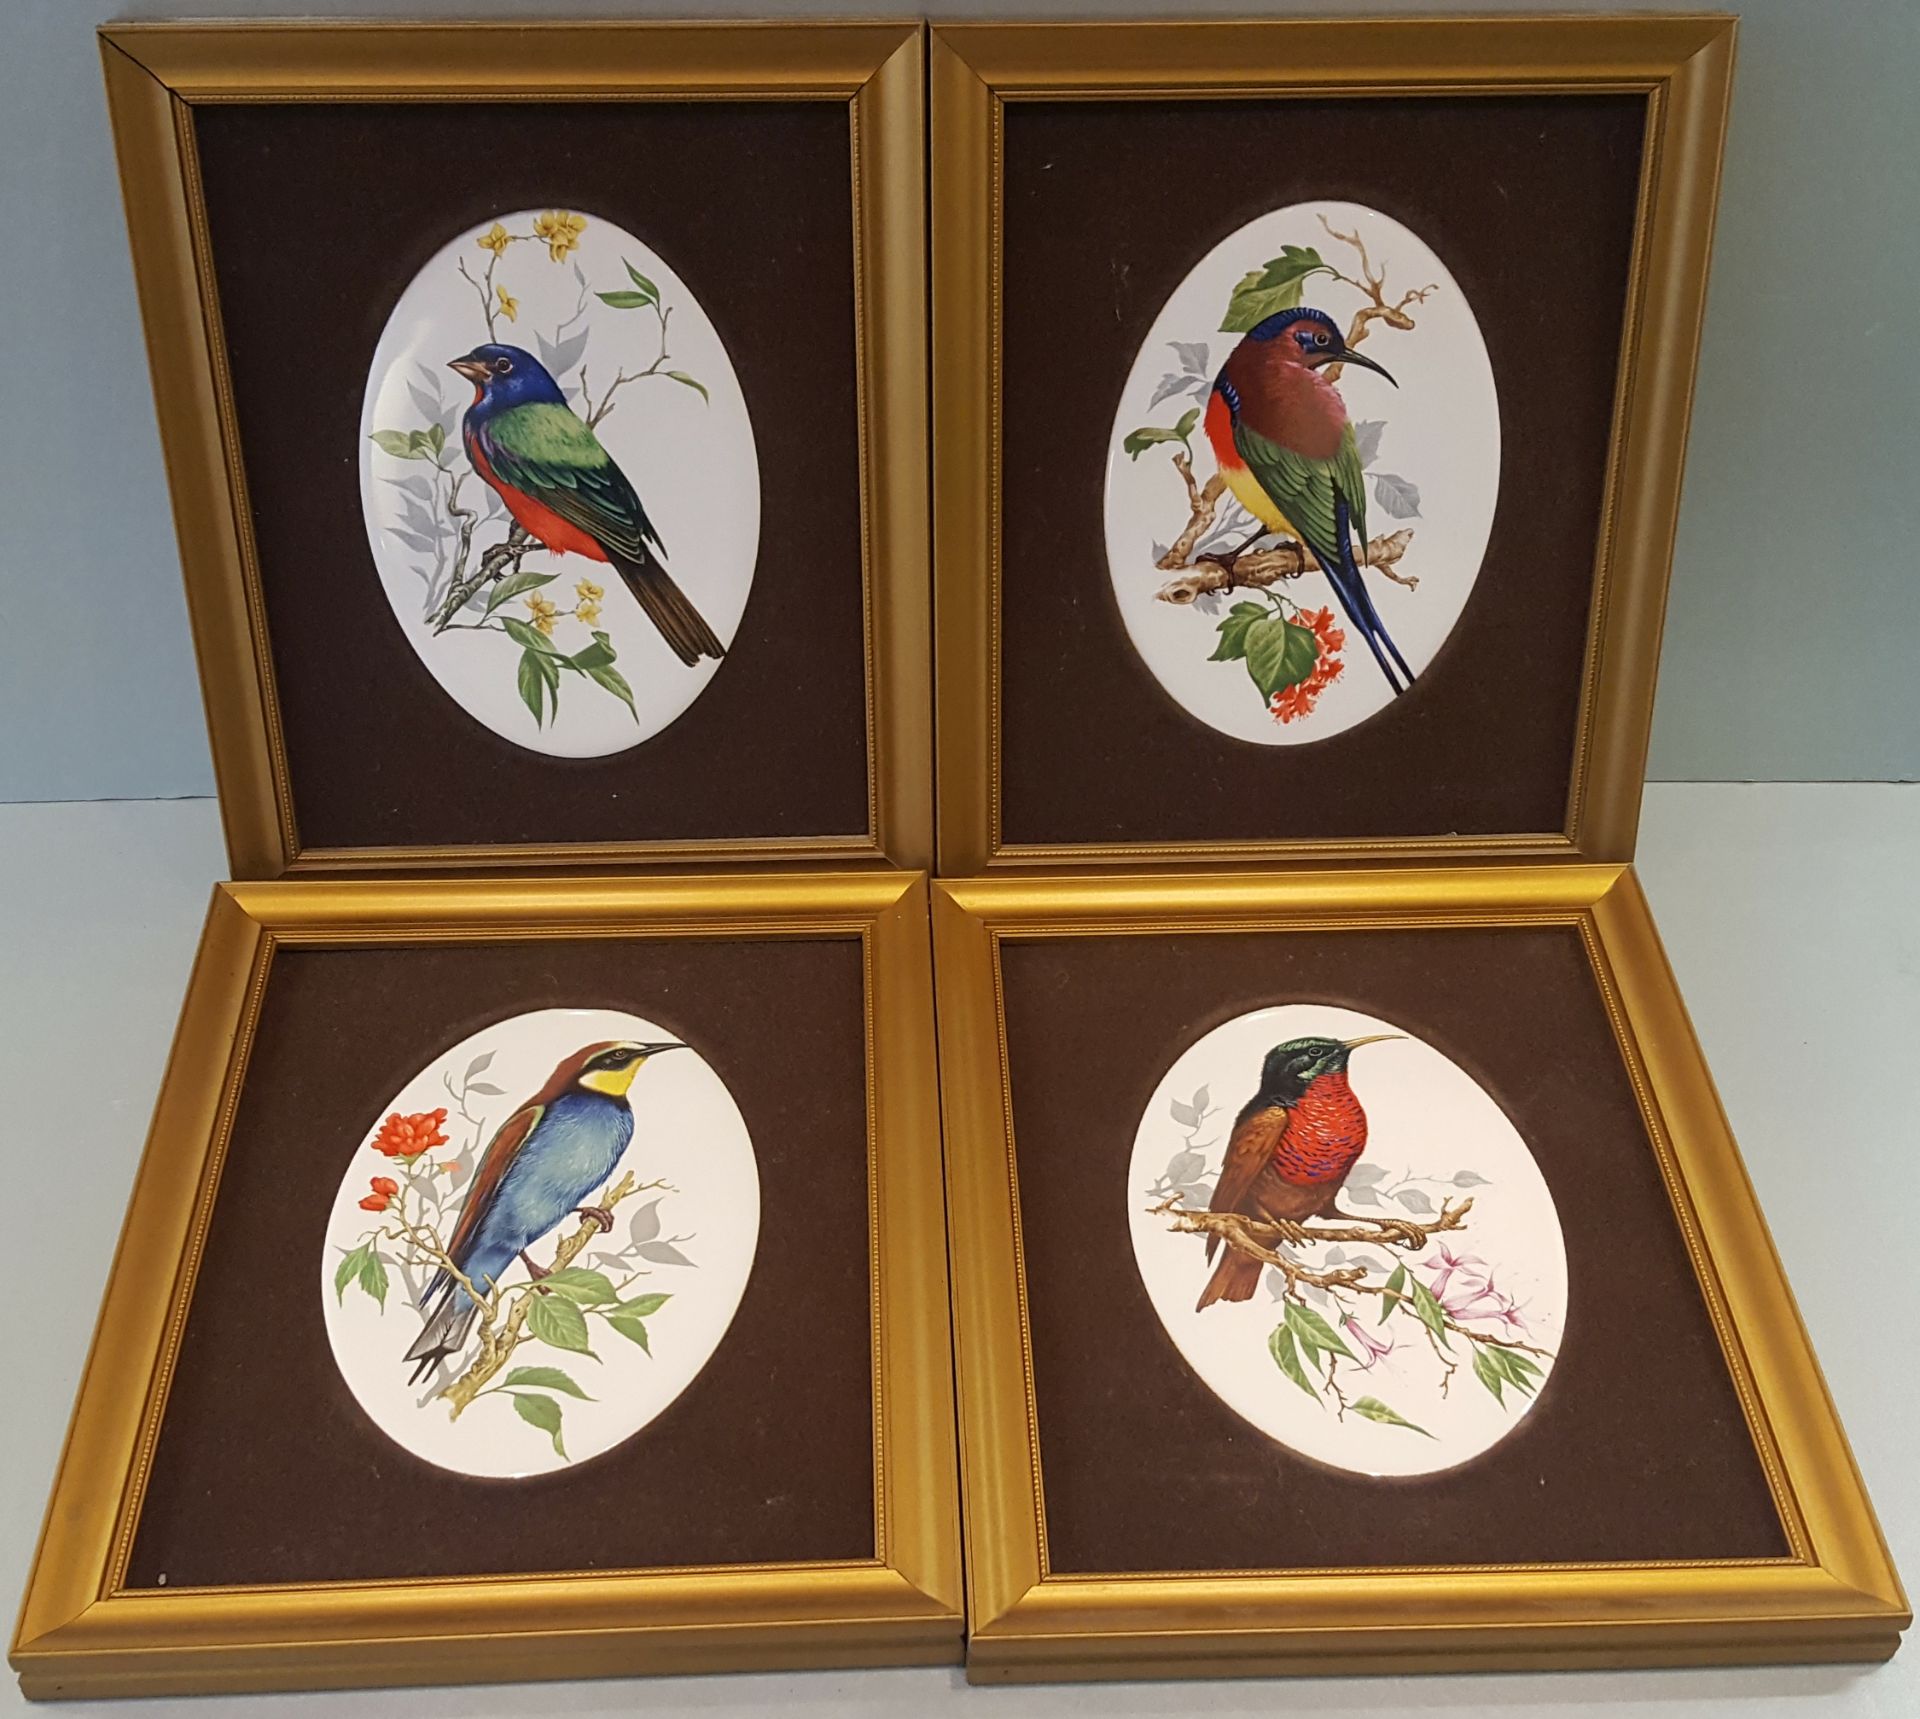 Vintage Retro Pictures 2 sets of 4 Prints E Walker Delft & Birds NO RESERVE - Image 3 of 3